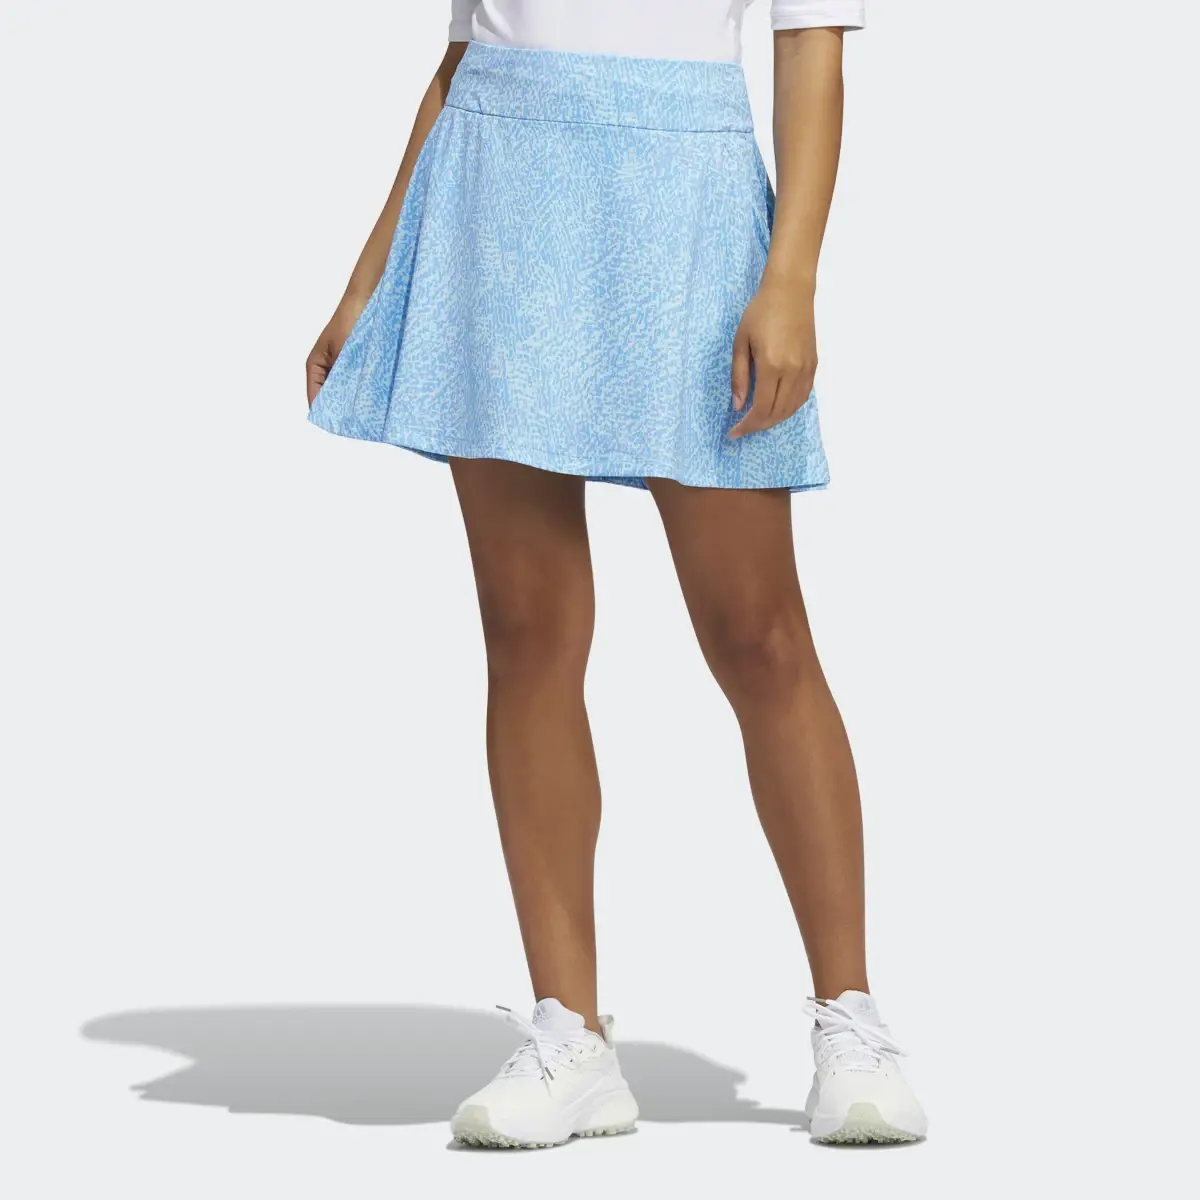 Adidas Printed Frill Golf Skirt. 1